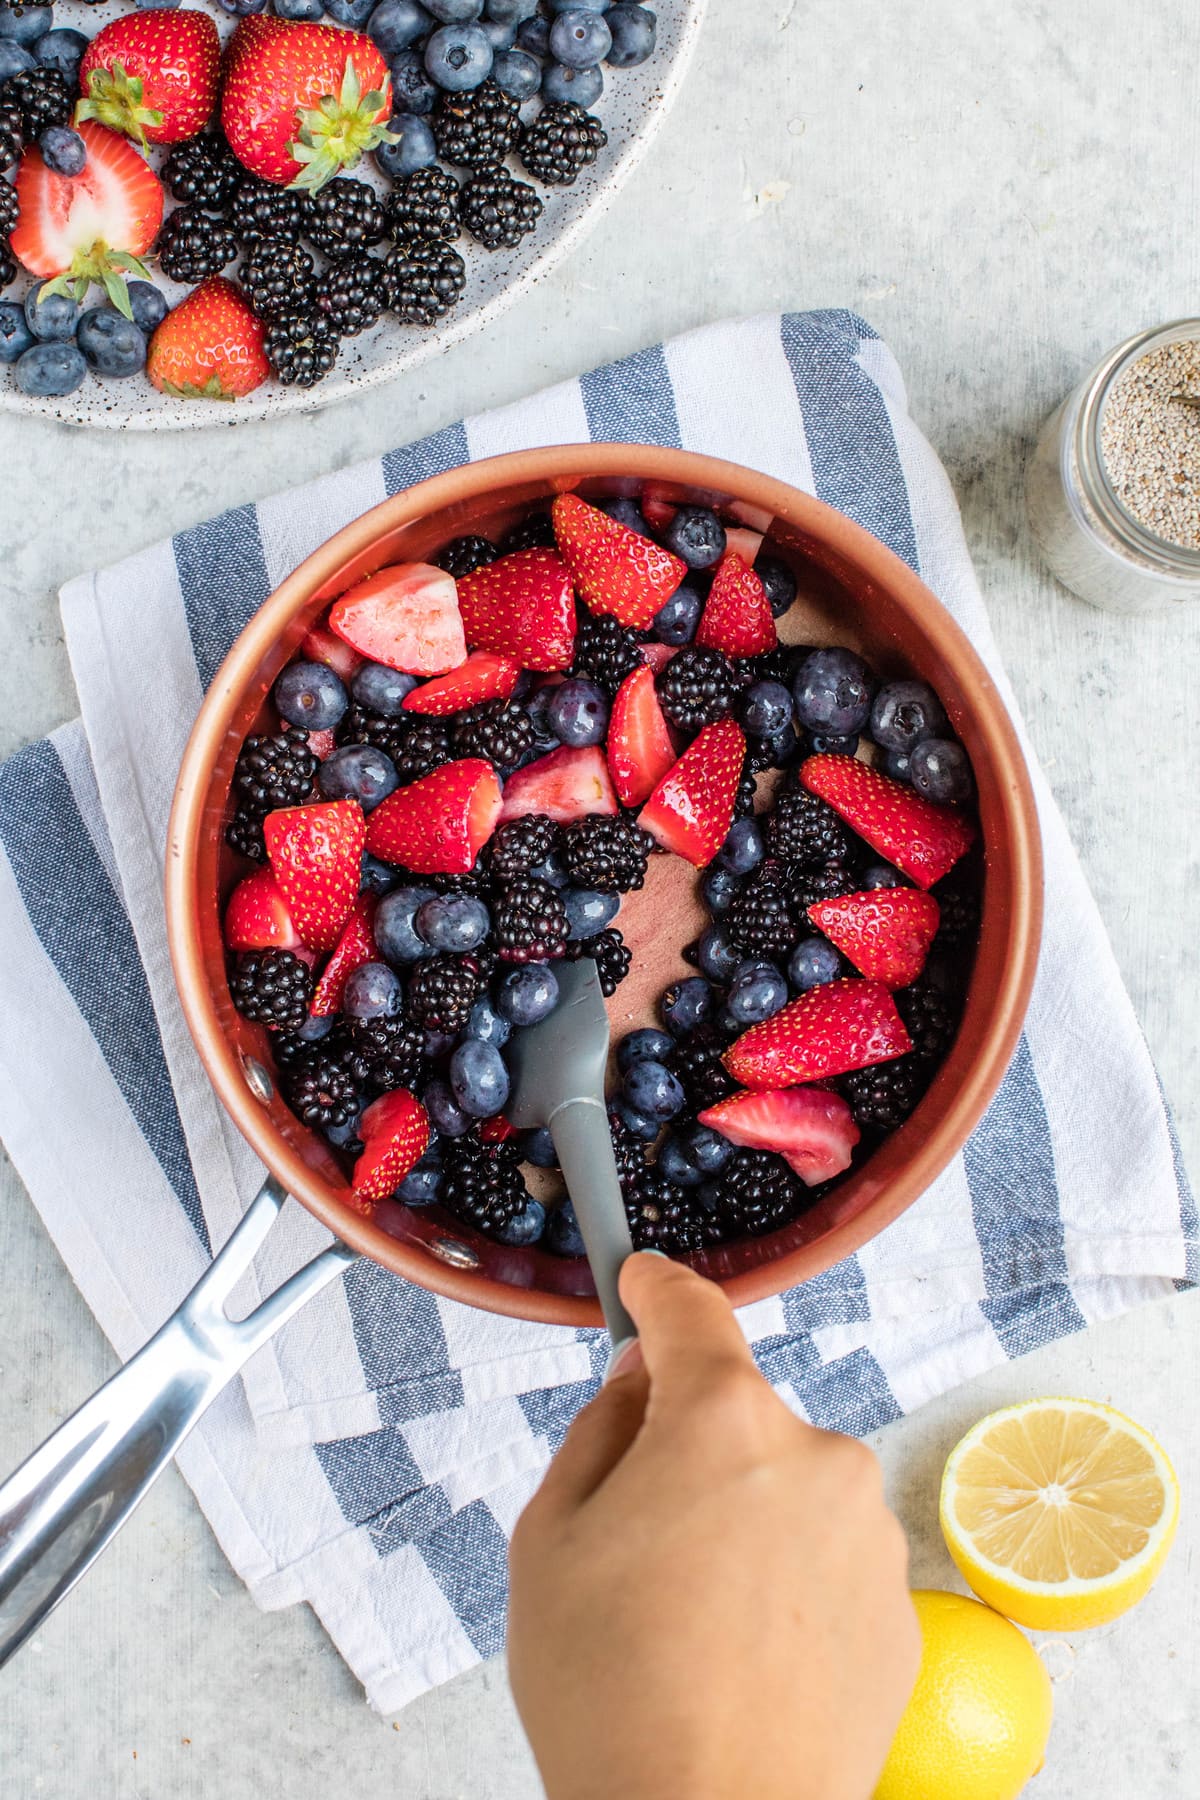 initial uncooked berries in pan